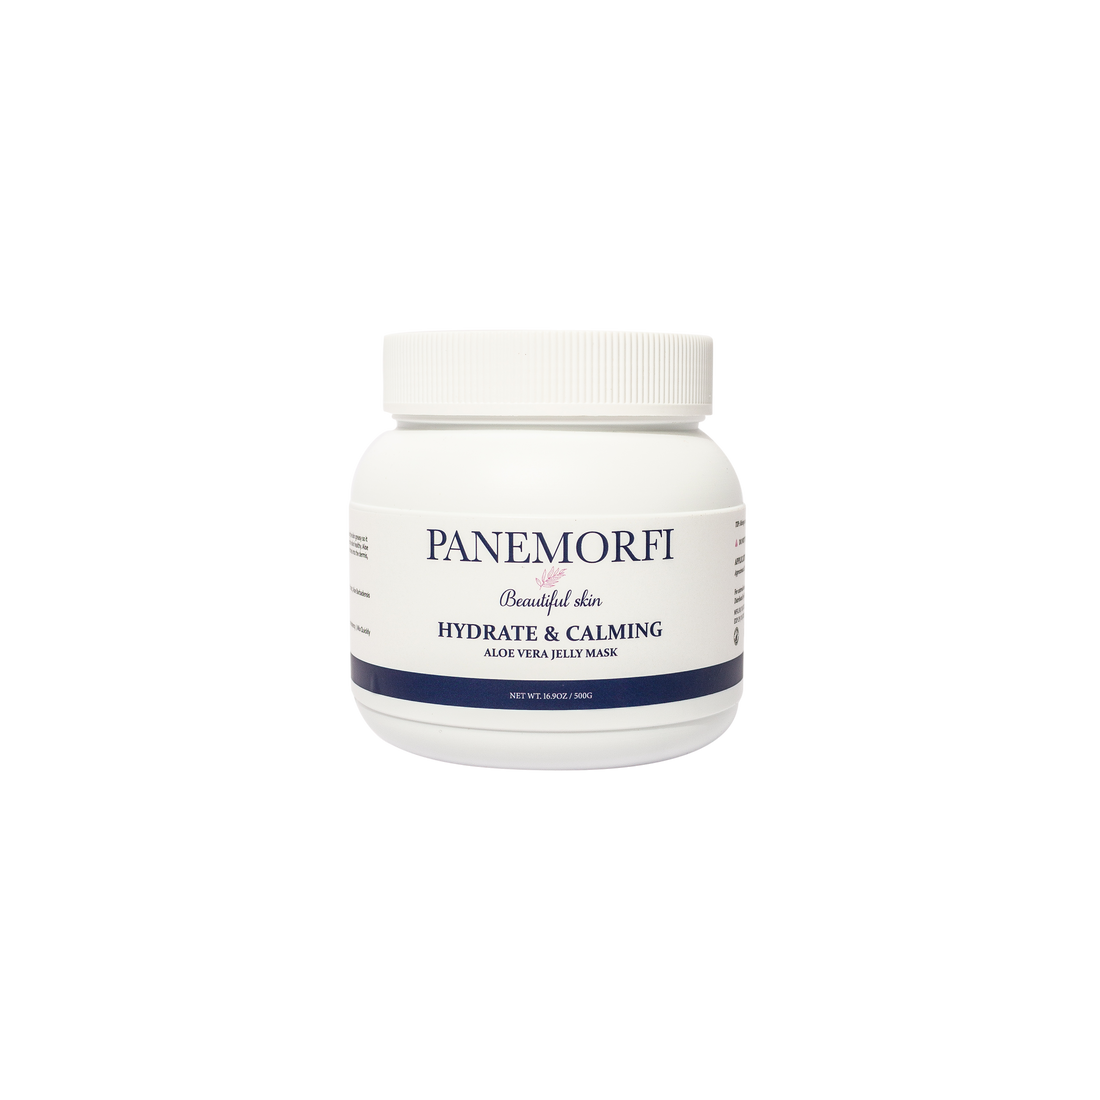 PANEMORFI - Hydrate &amp; Calming Aloe Vera Jelly Mask, 500g